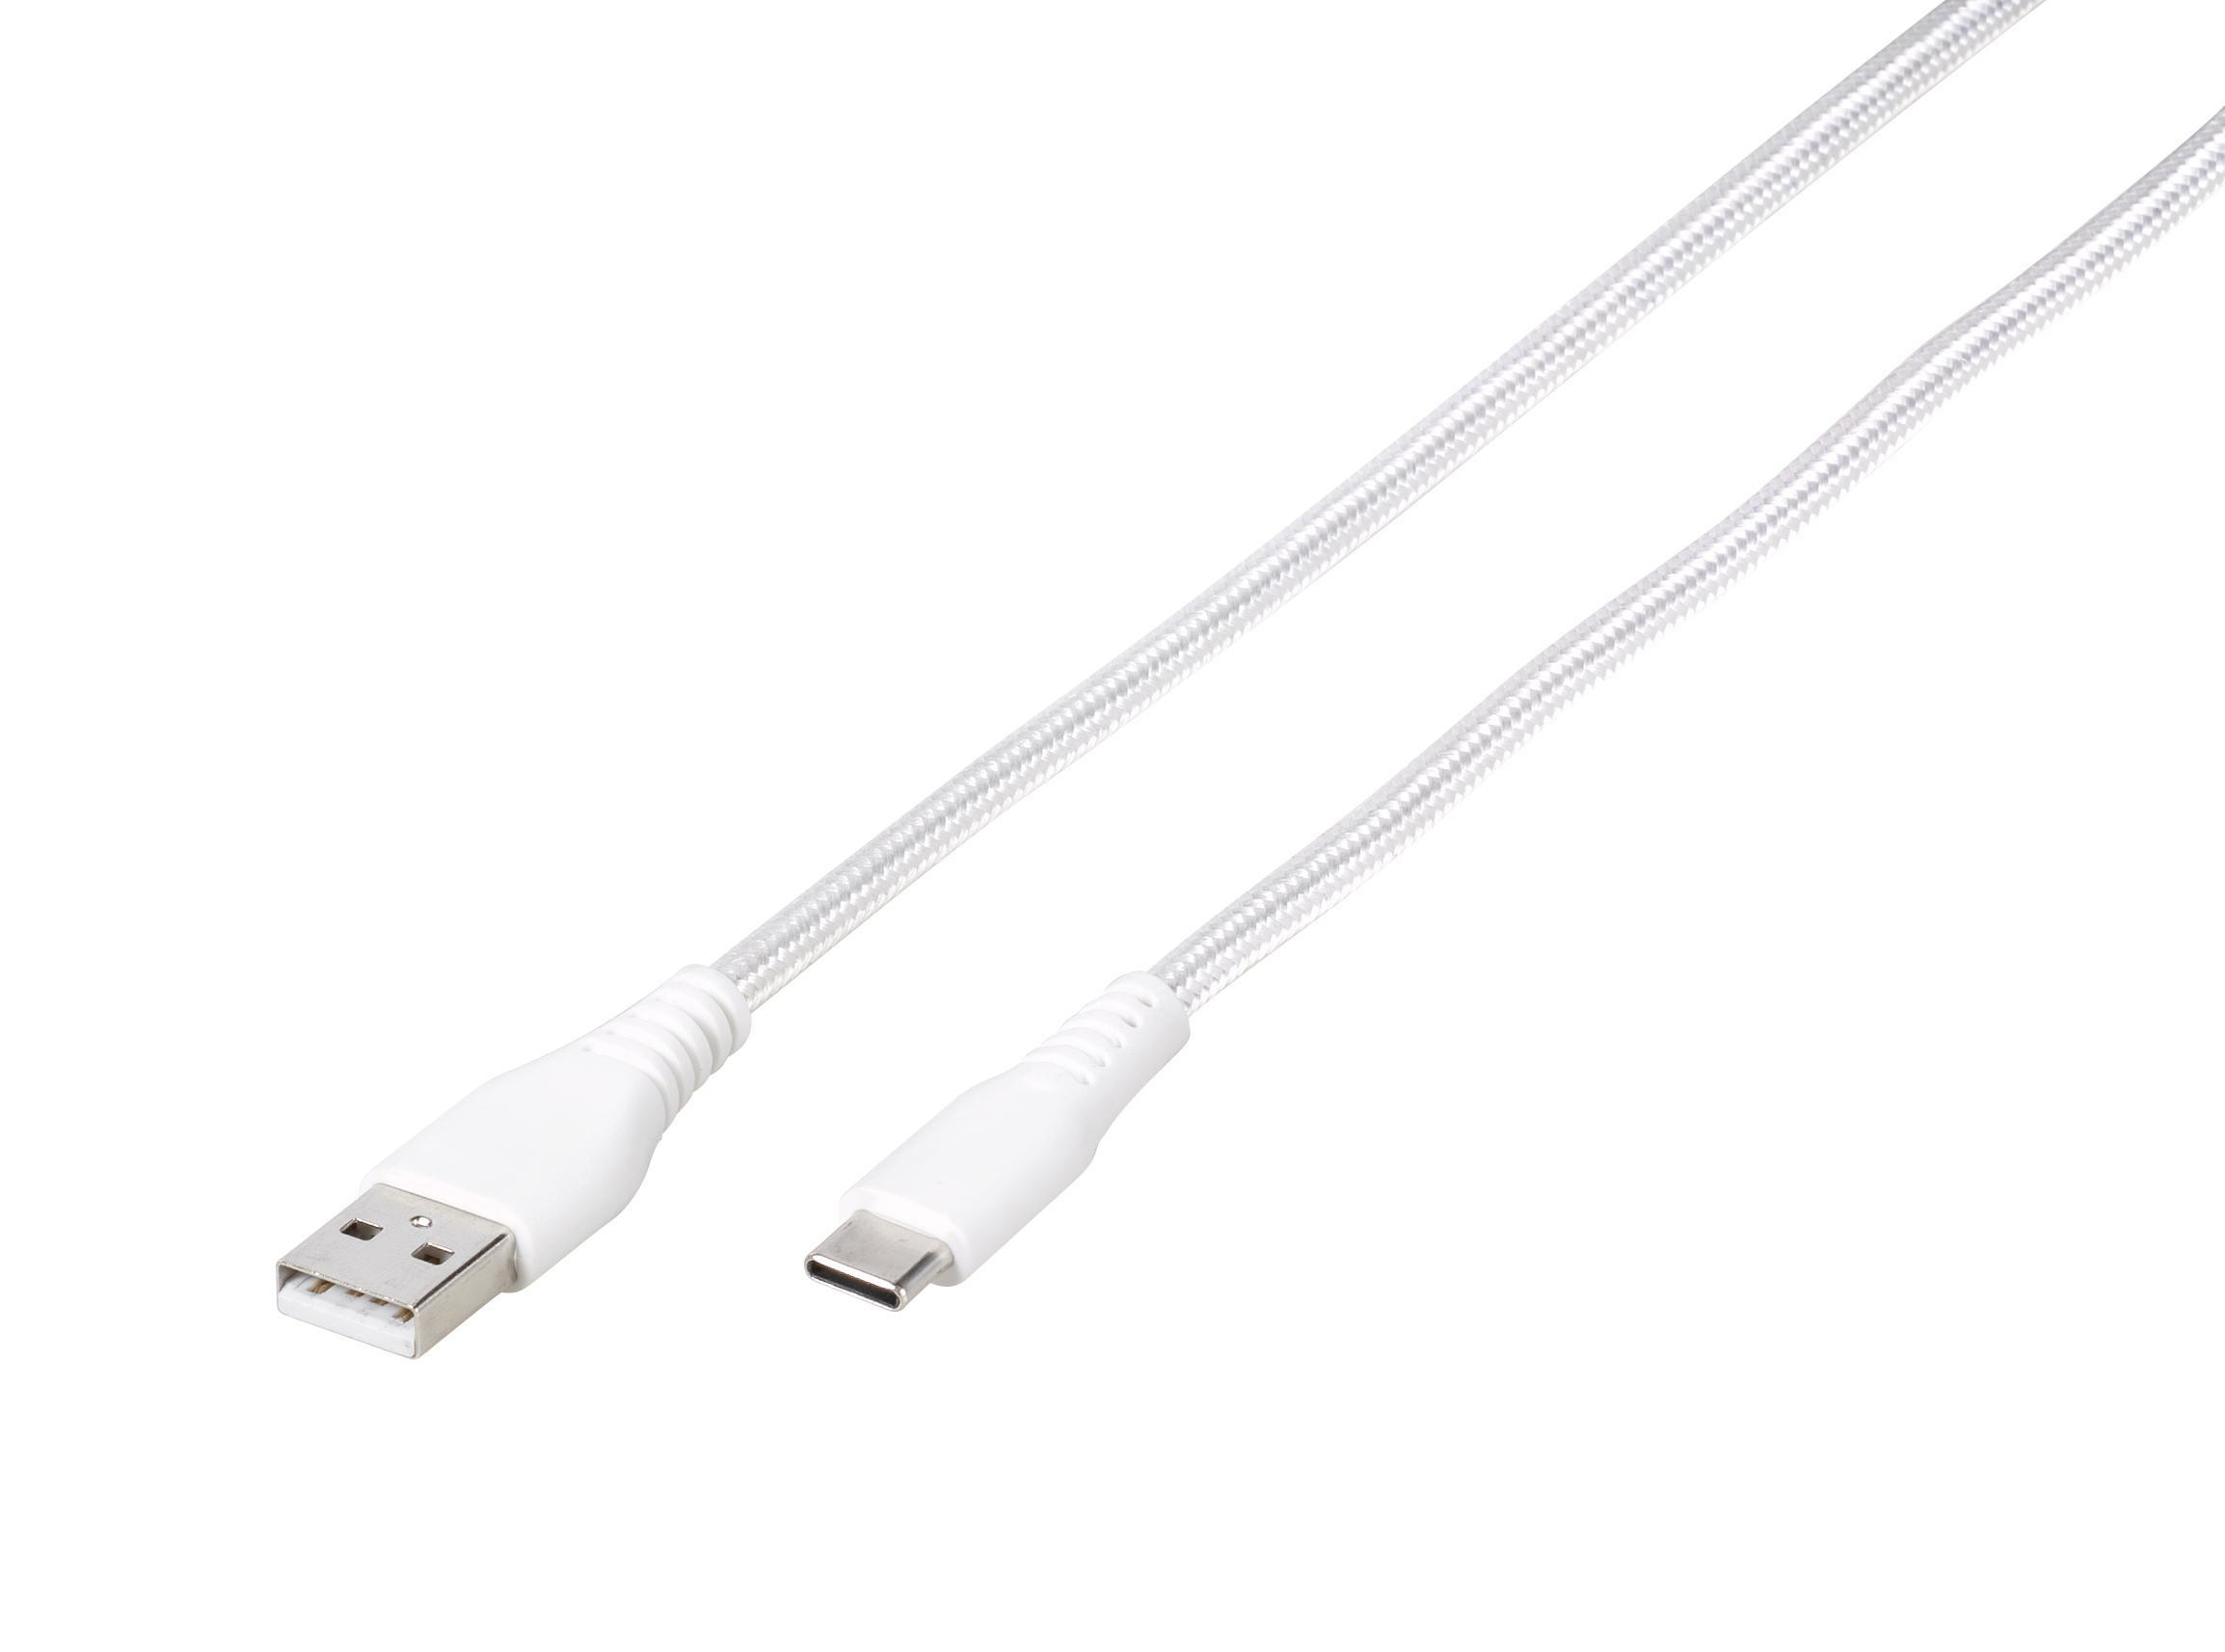 VIVANCO LongLife USB Type-C™, Ladekabel, 2,5 m, Schwarz